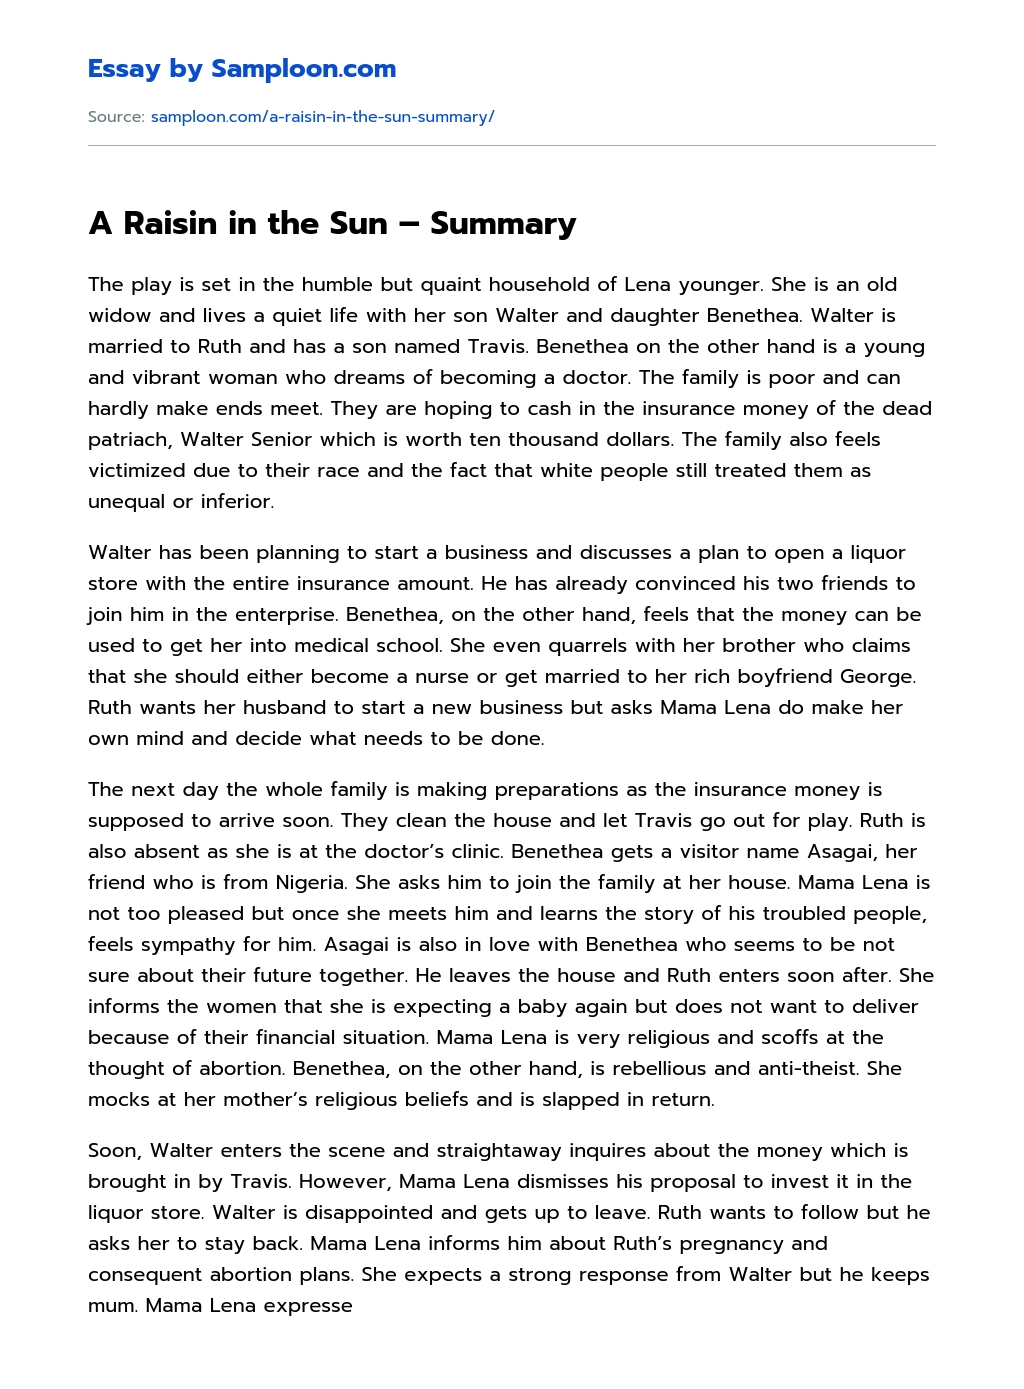 a raisin in the sun critical review